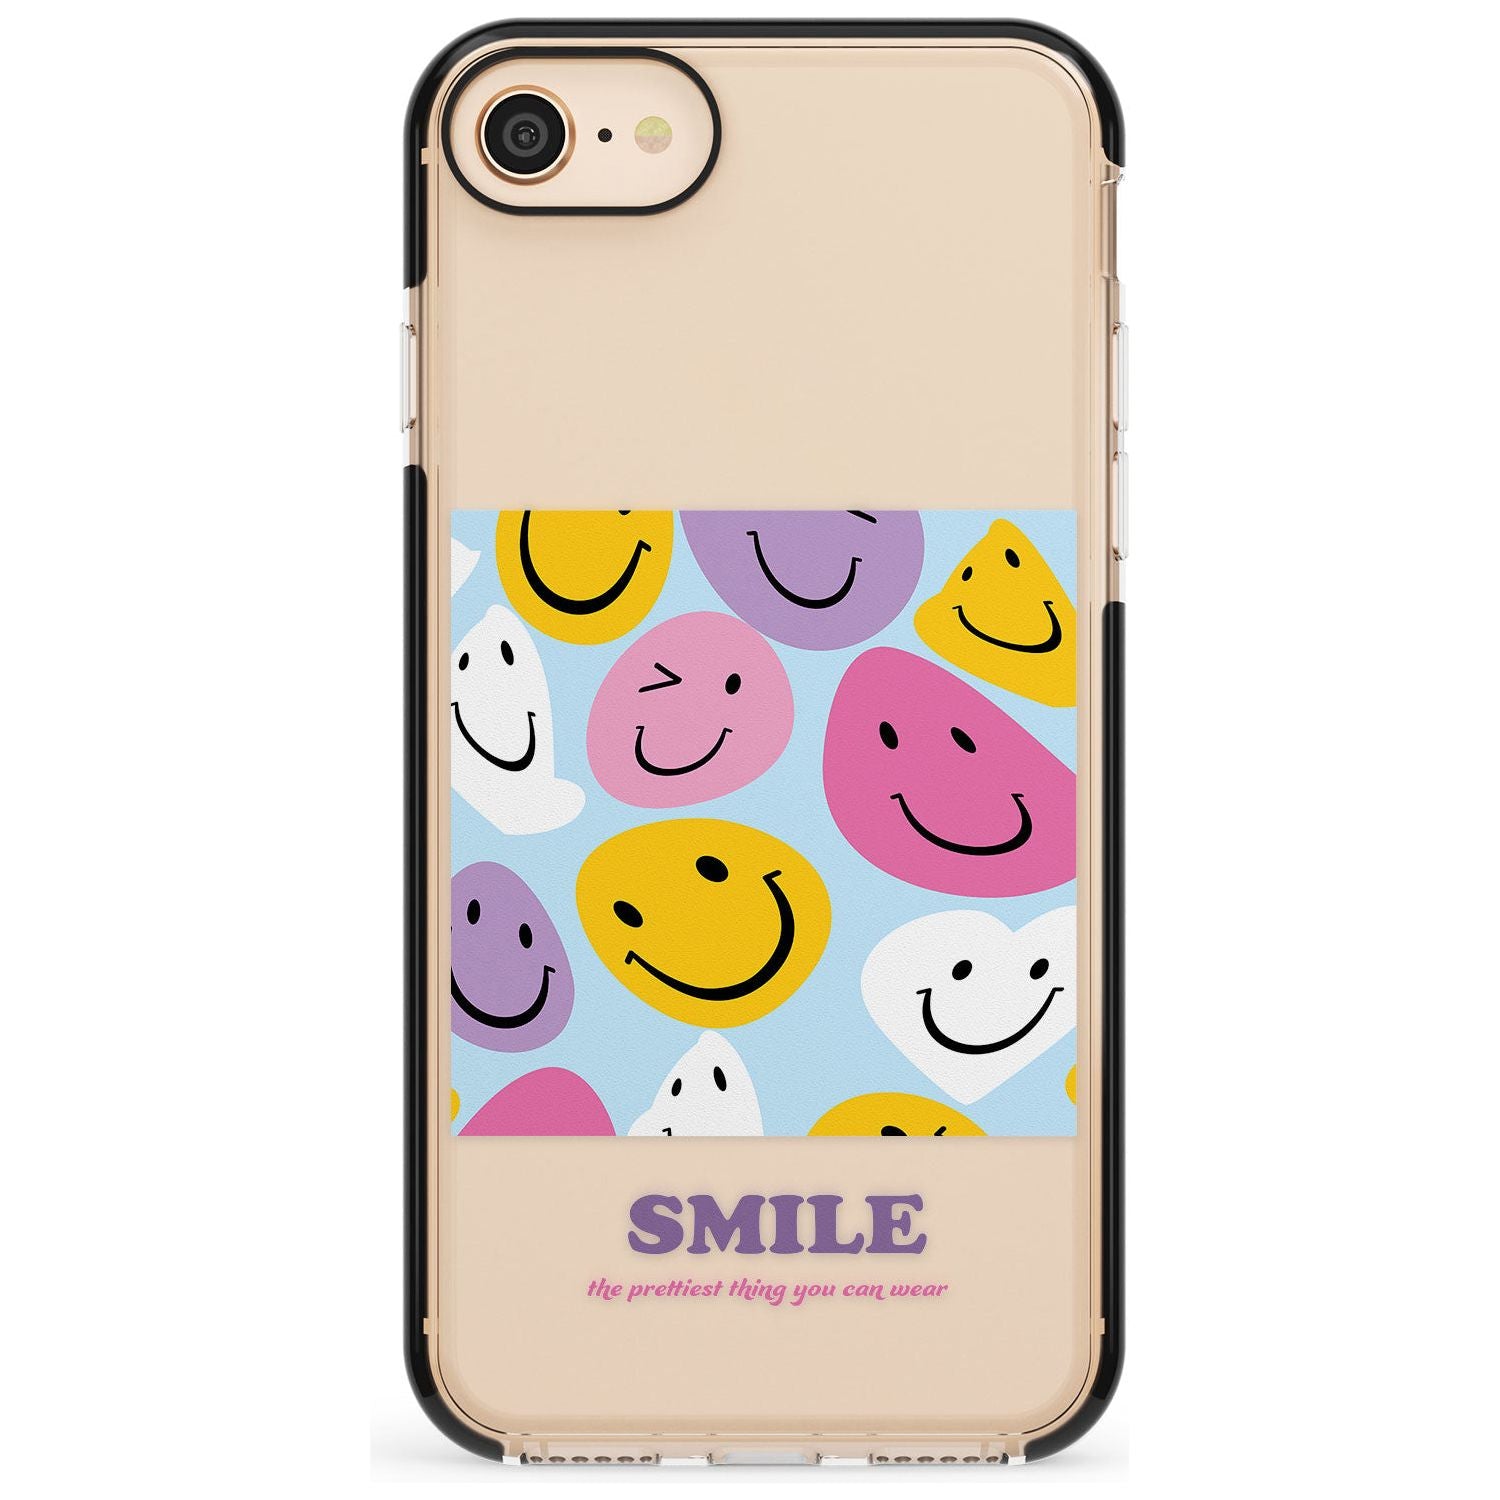 A Smile Black Impact Phone Case for iPhone SE 8 7 Plus